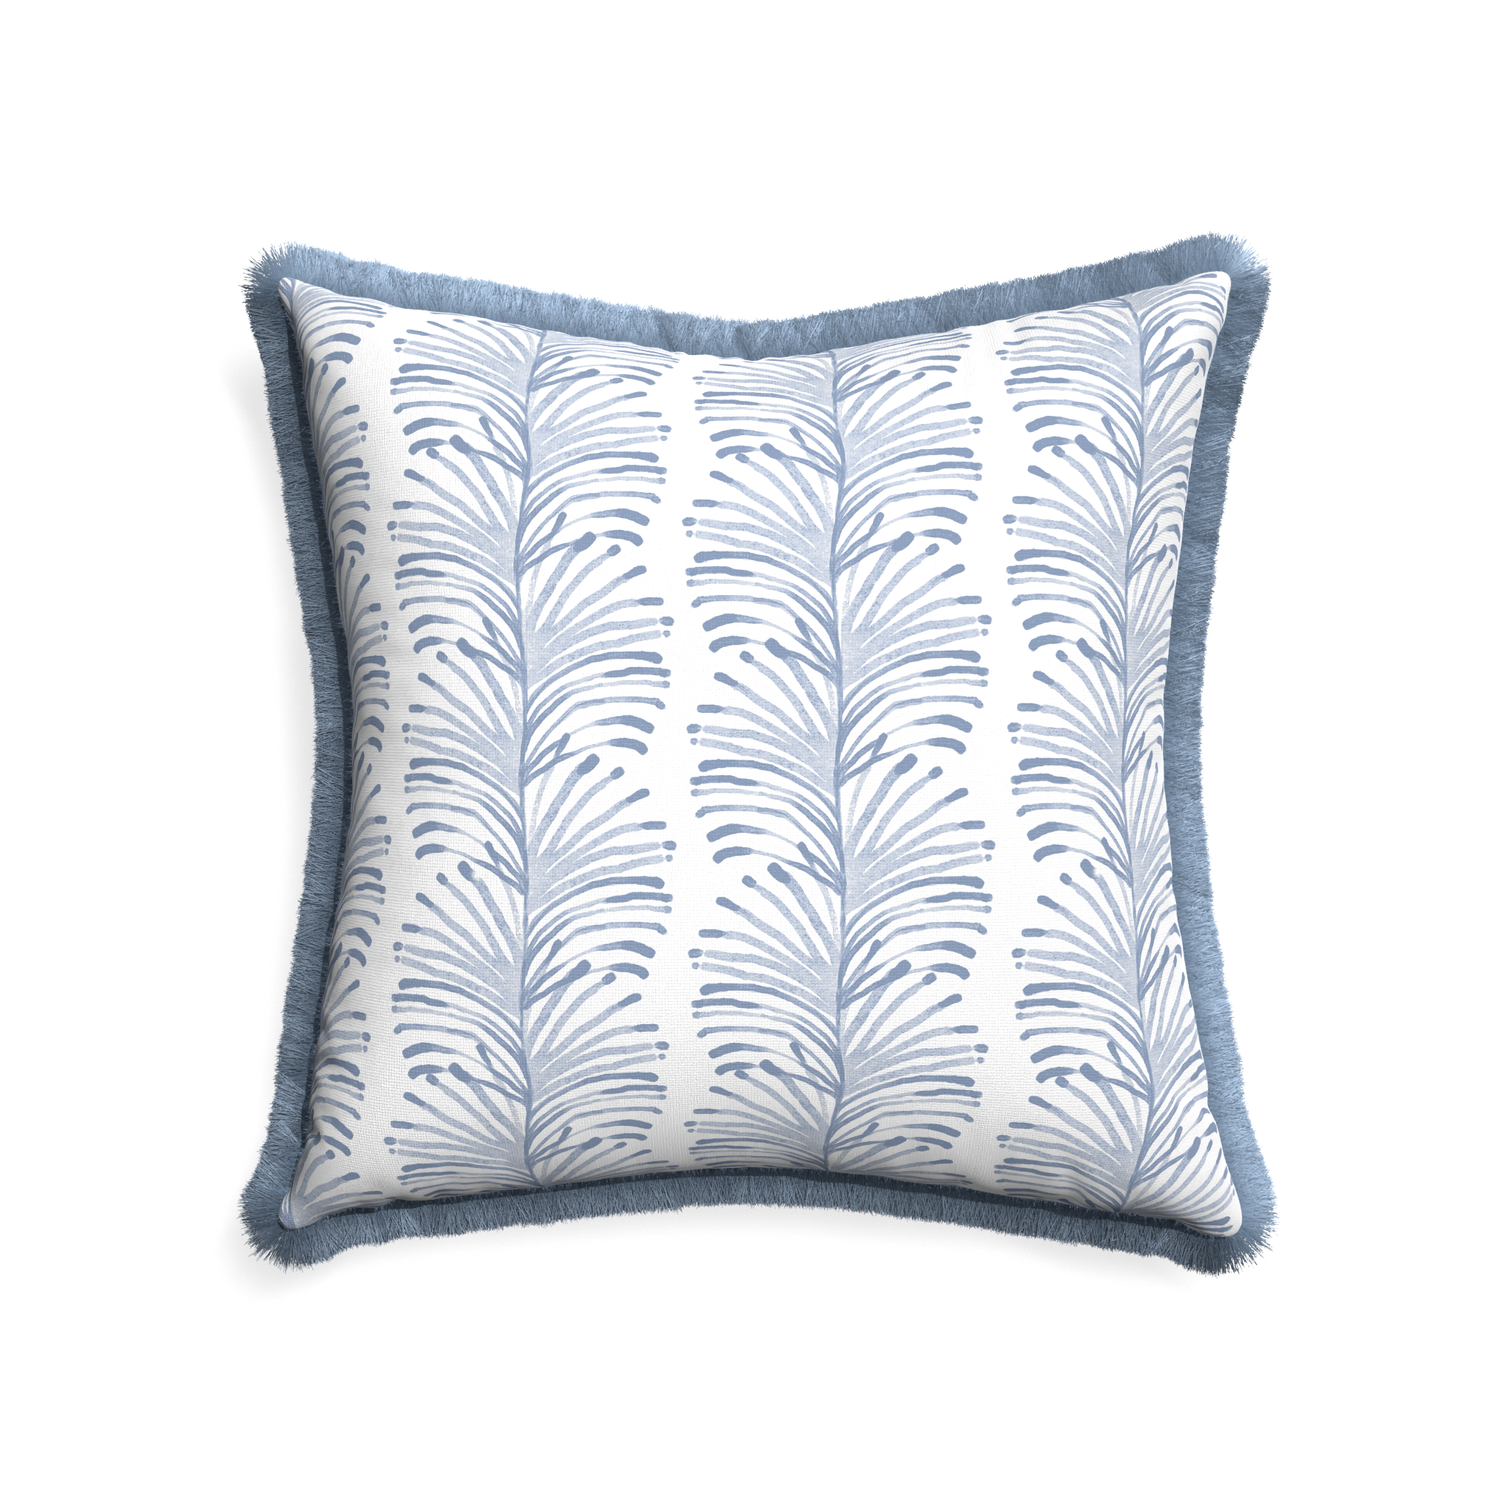 22-square emma sky custom pillow with sky fringe on white background